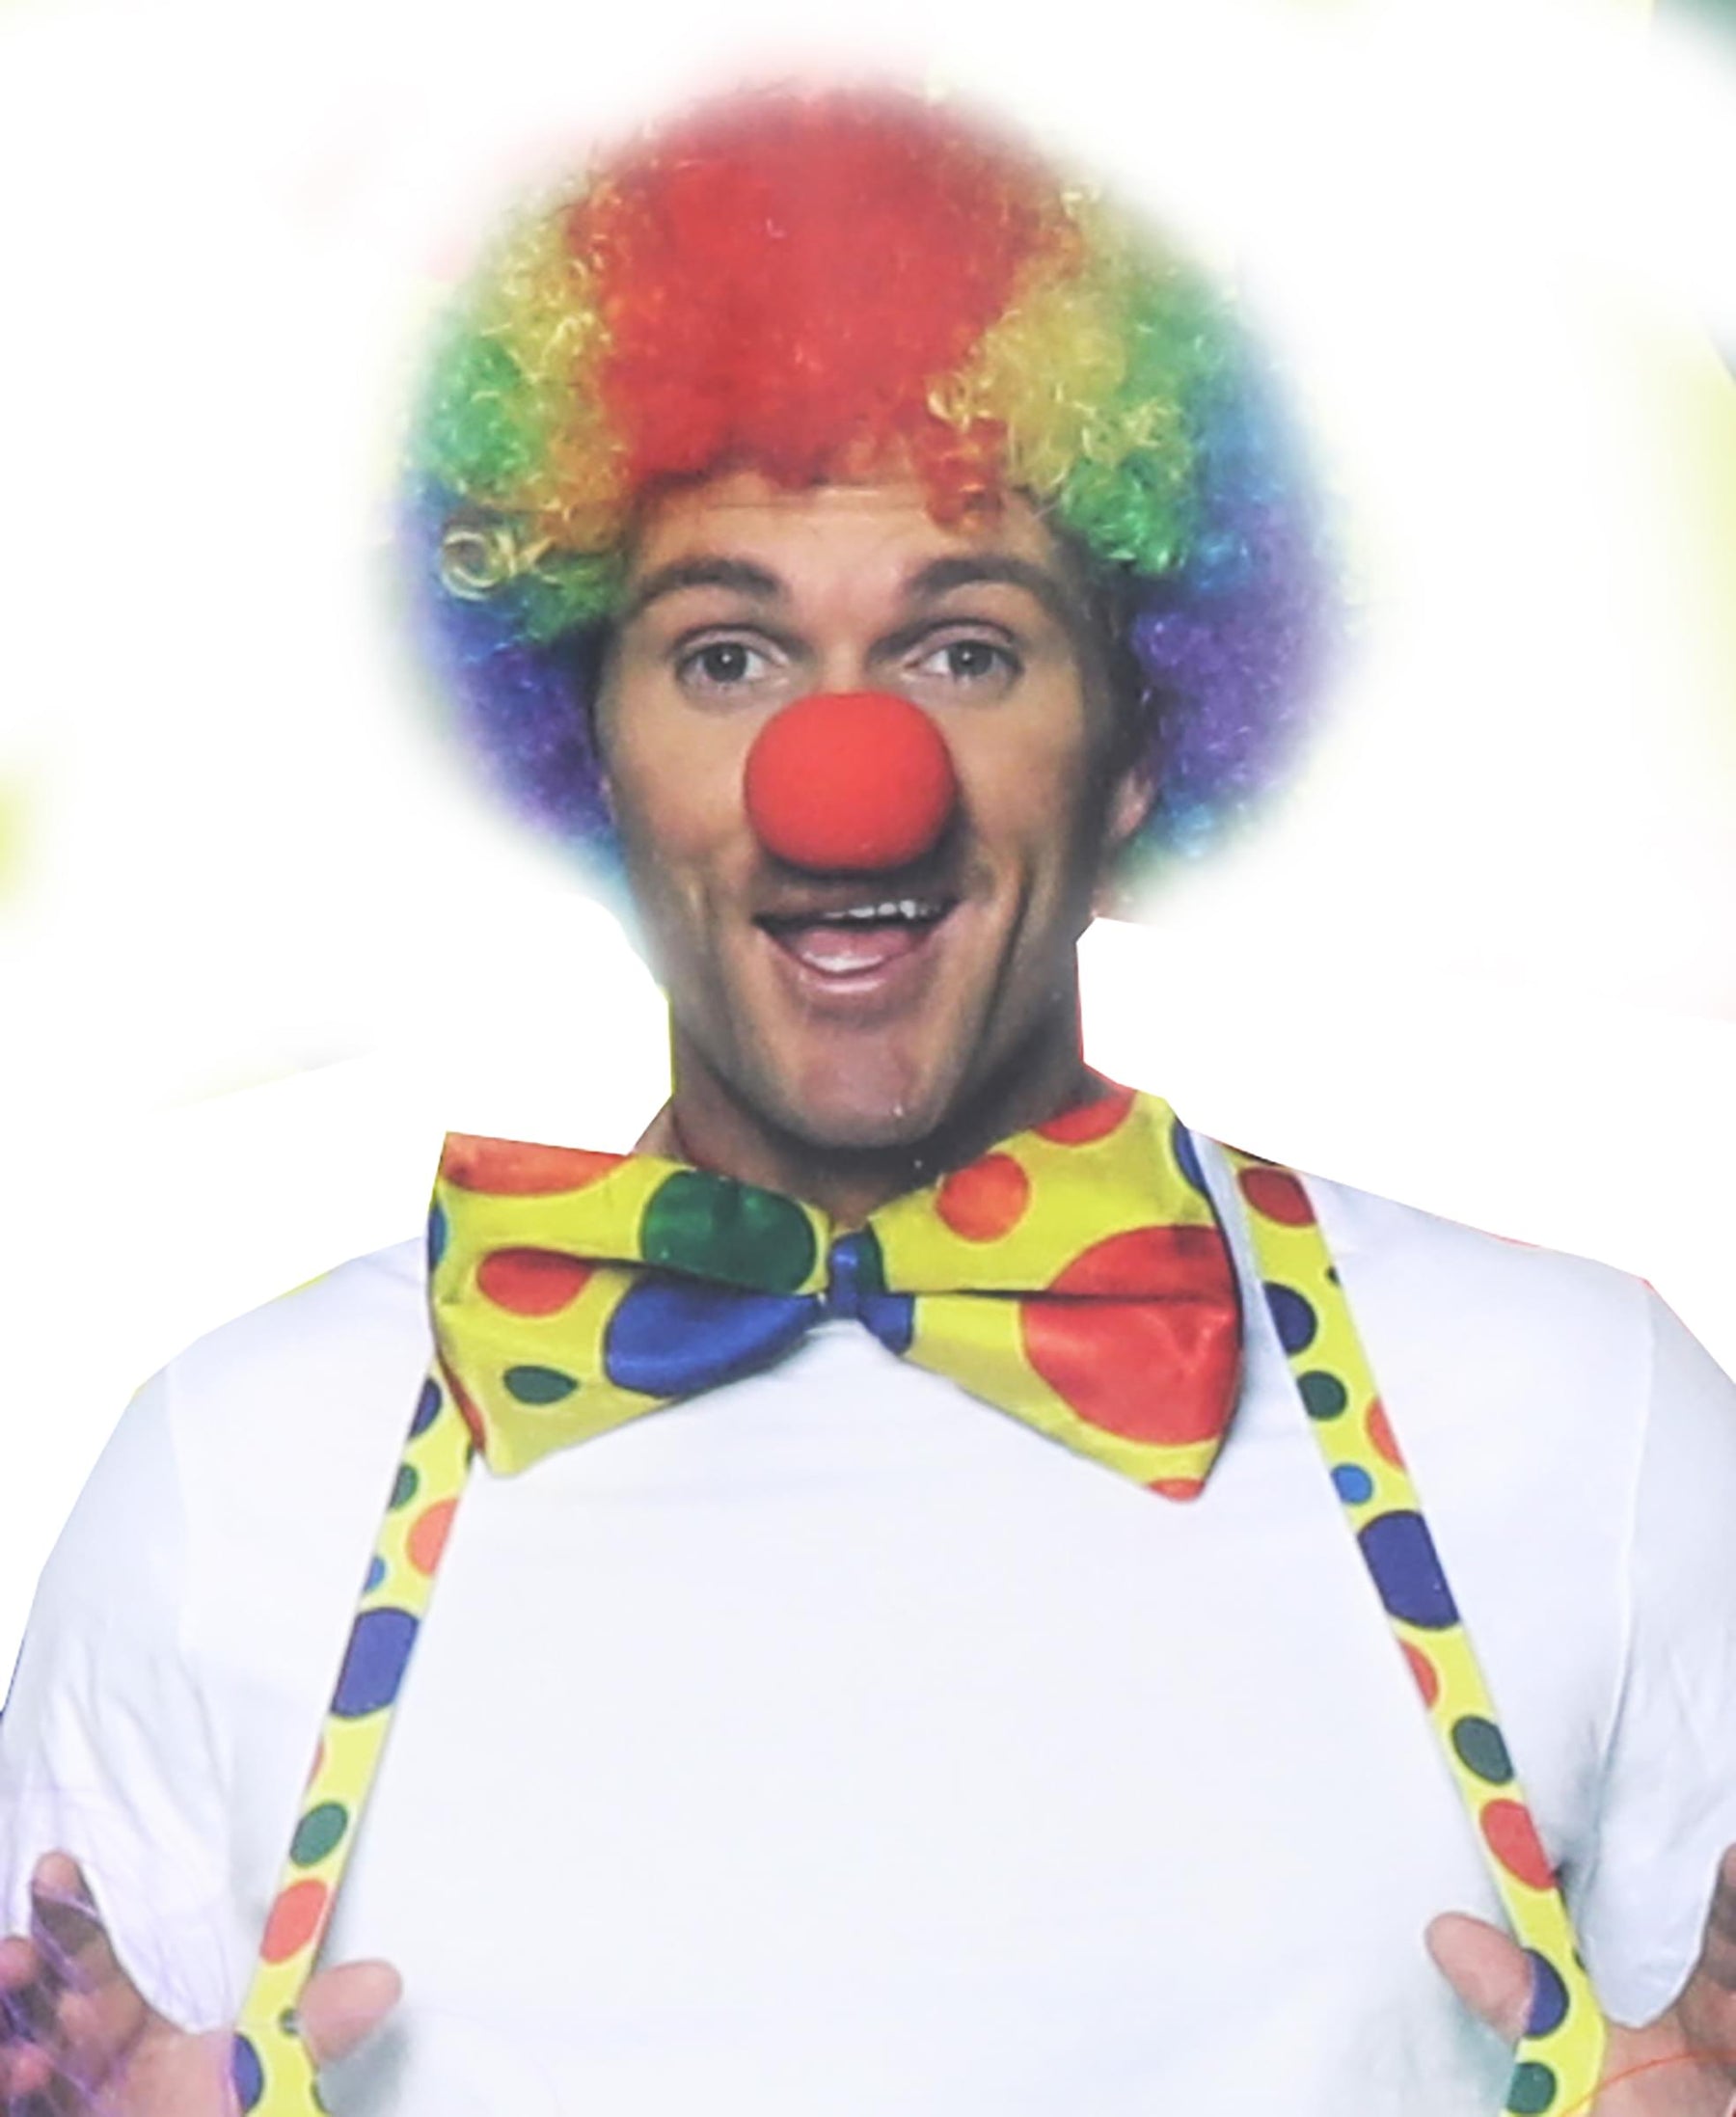 4-Piece Clown Adult Costume Accessory Kit